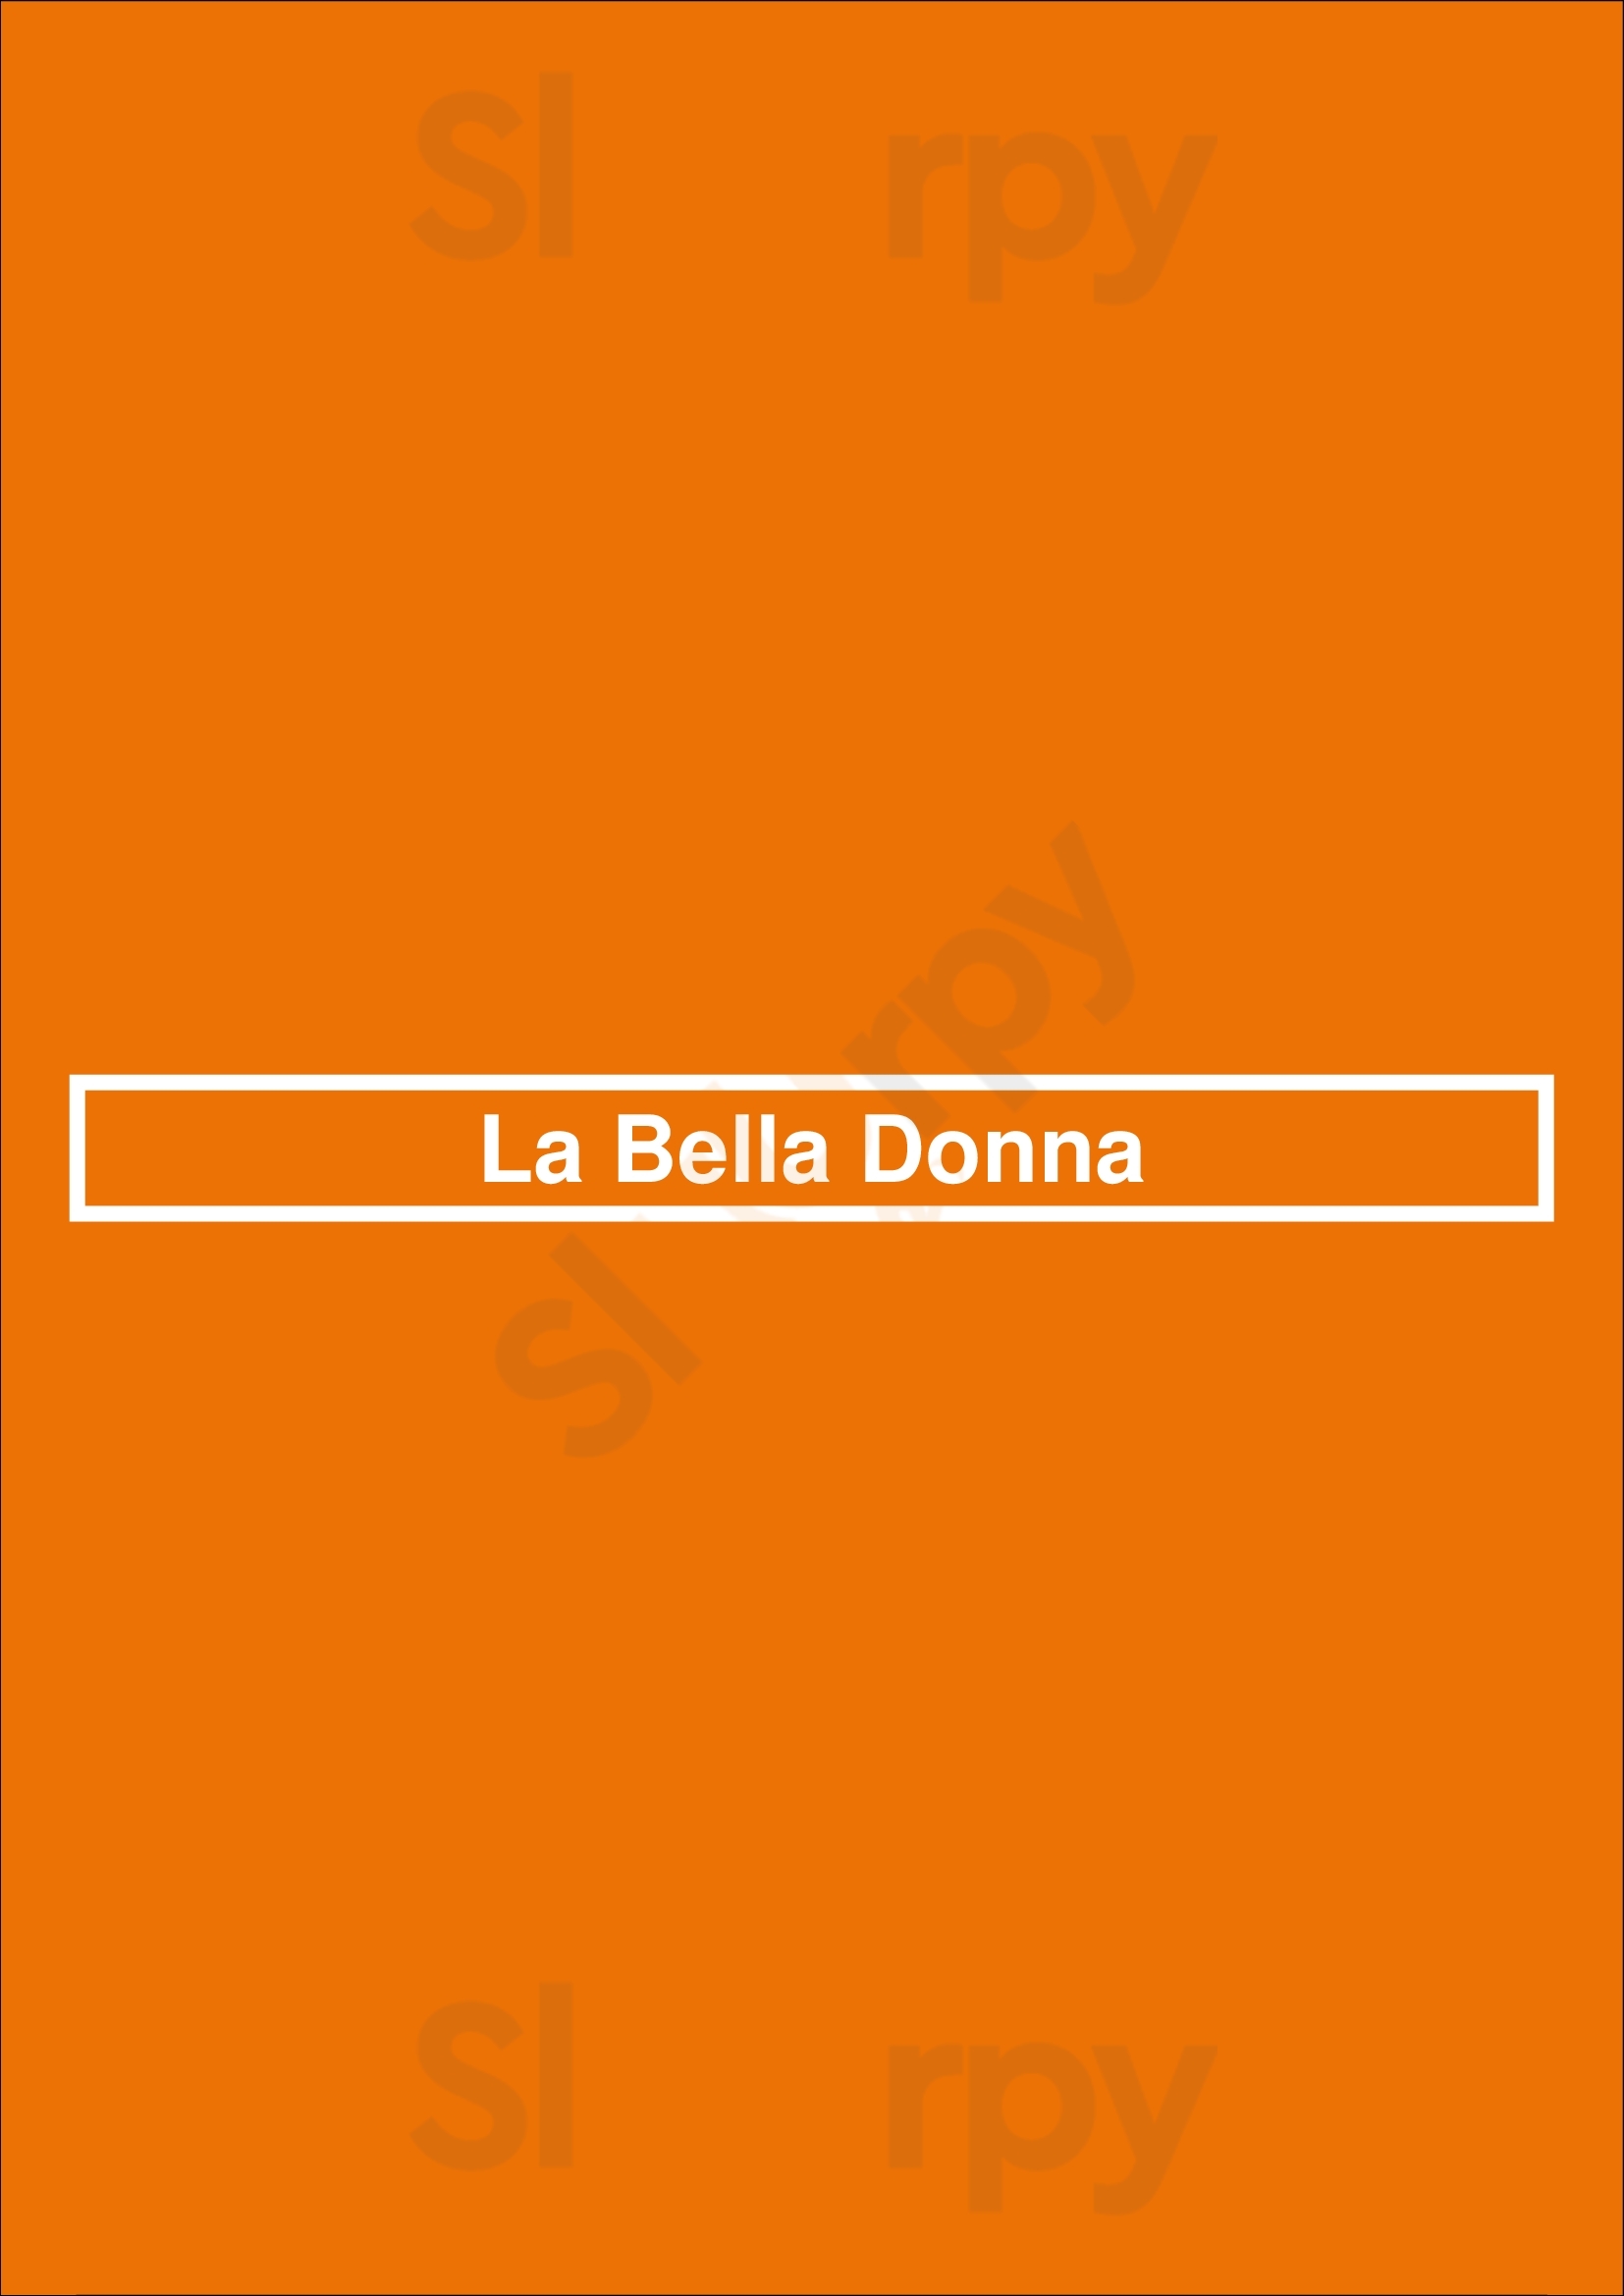 La Bella Donna Paris Menu - 1